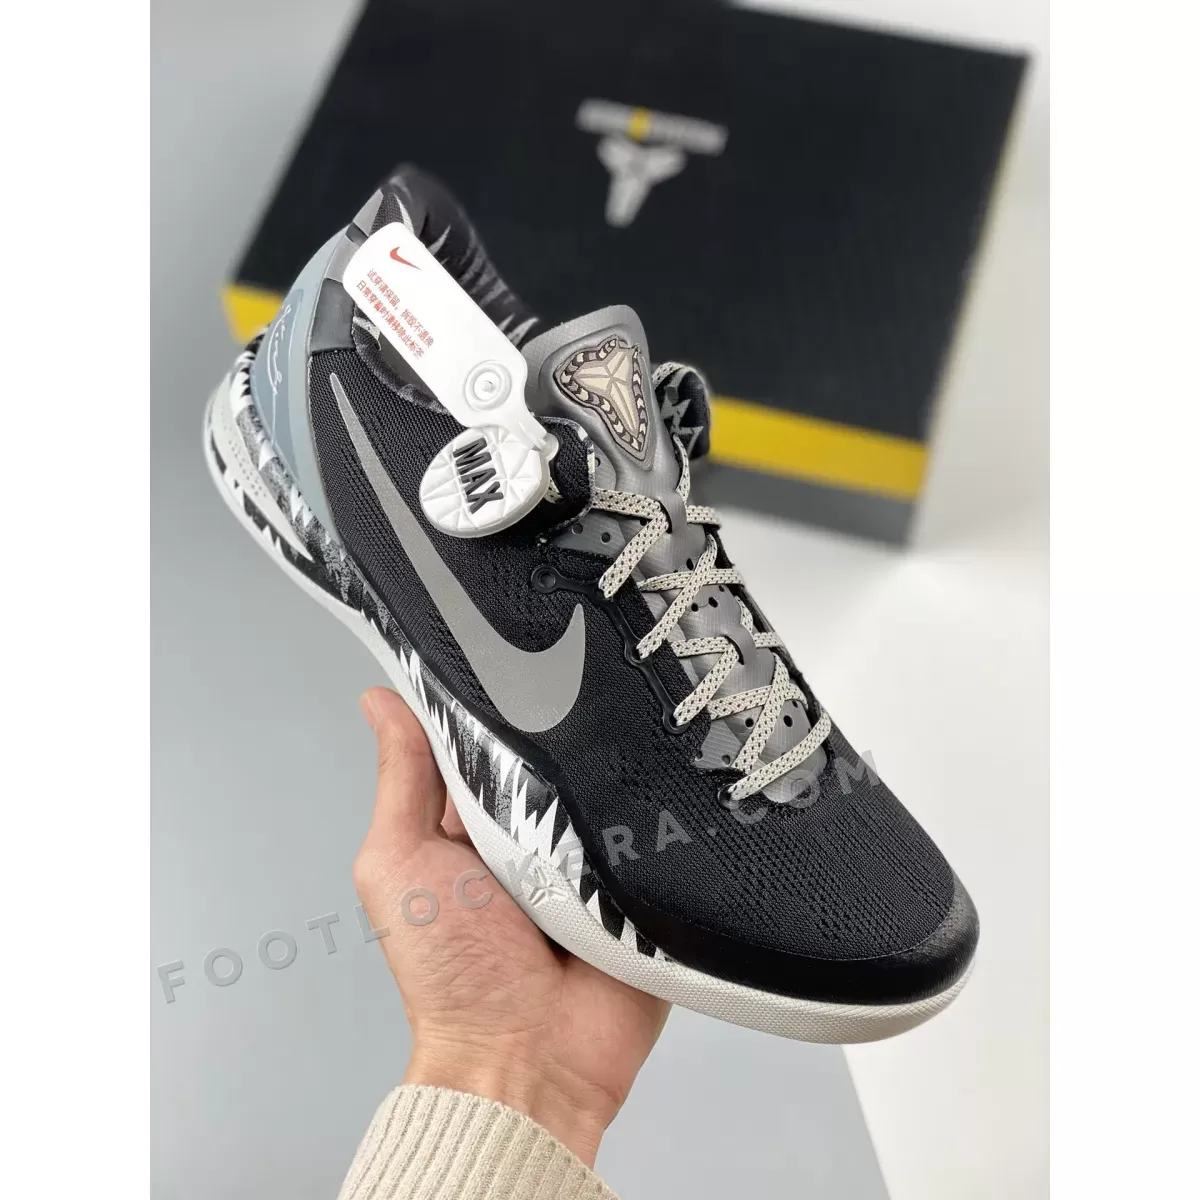 Nike Kobe 8 System 'Philippines Pack Black Silver' kobe 8 philippines